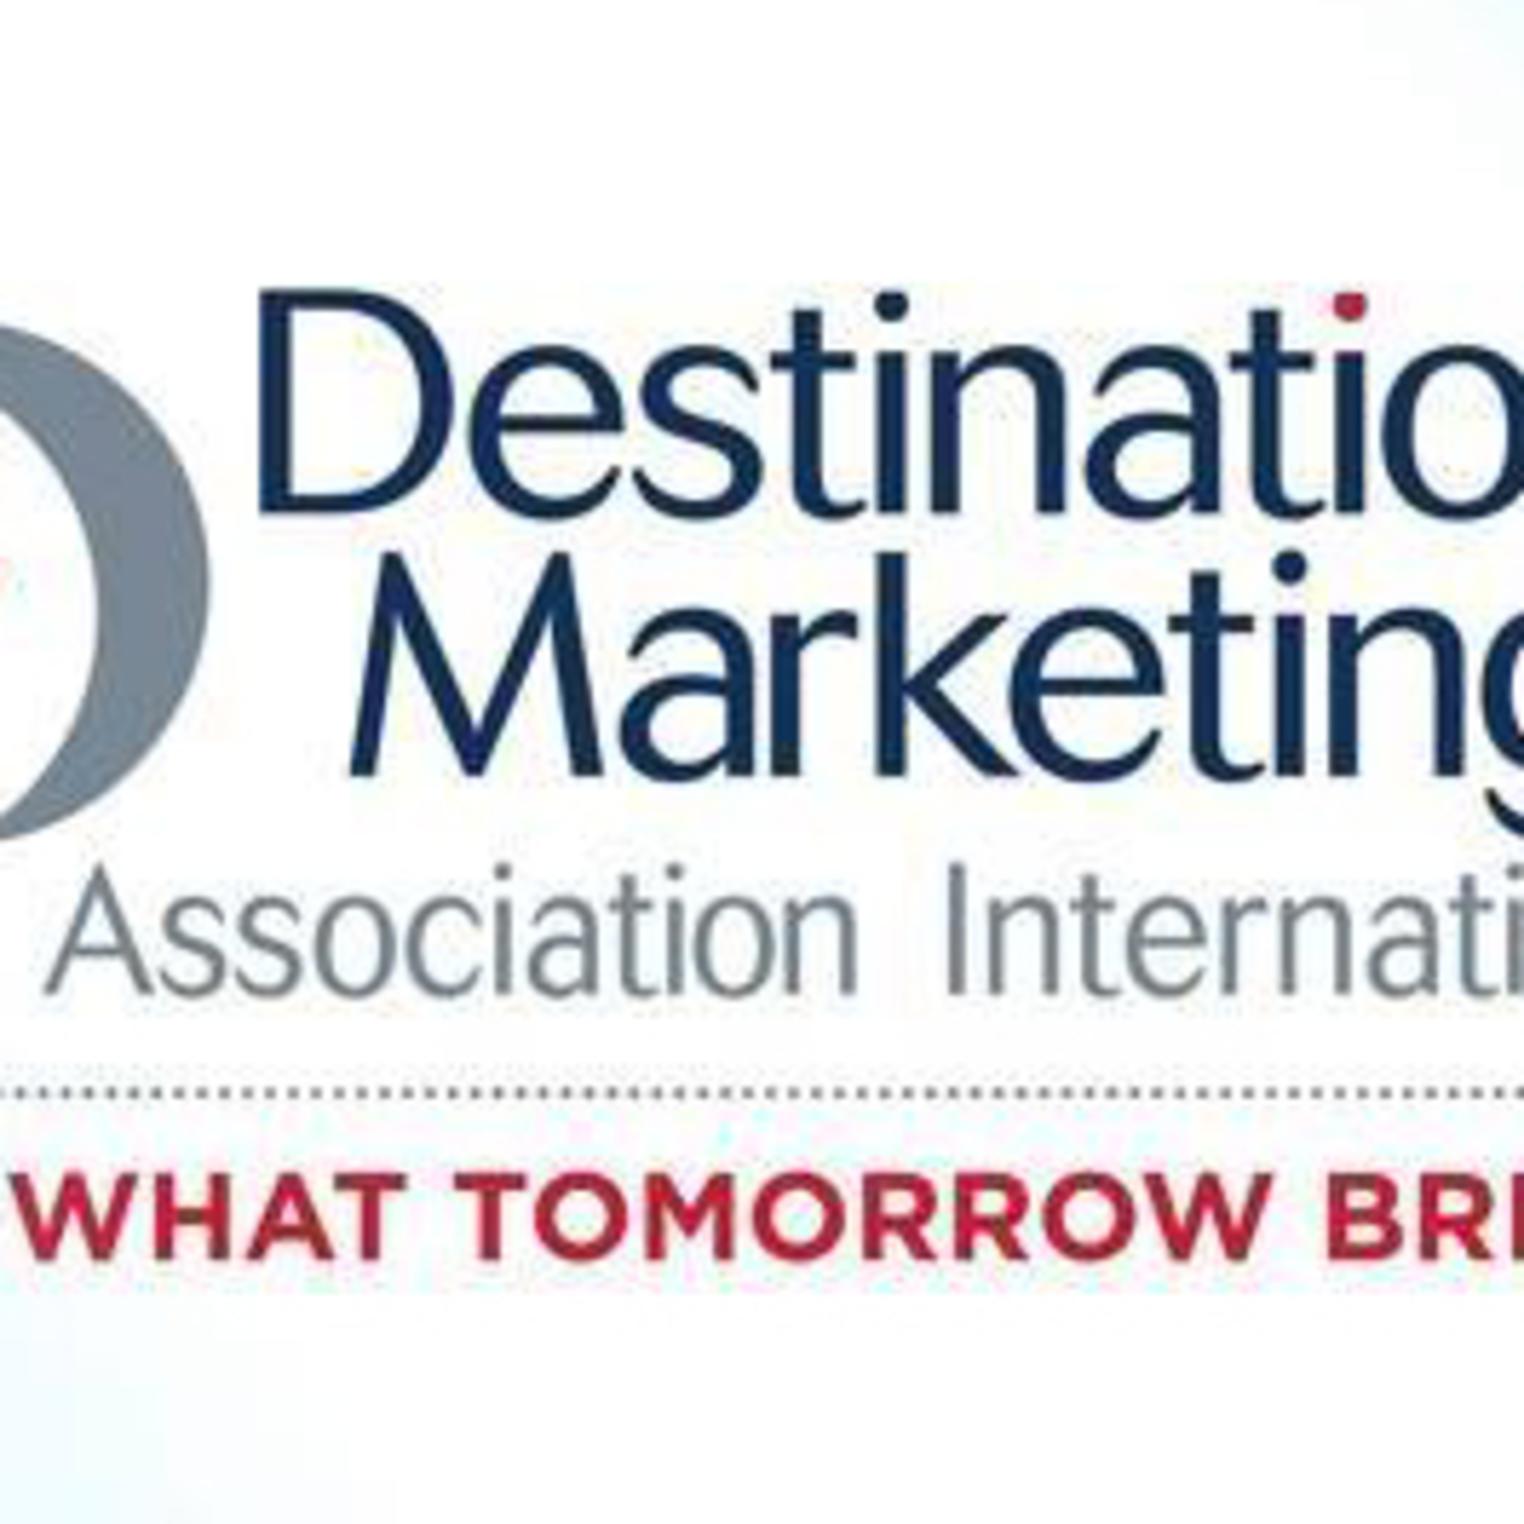 Destination Marketing Association International